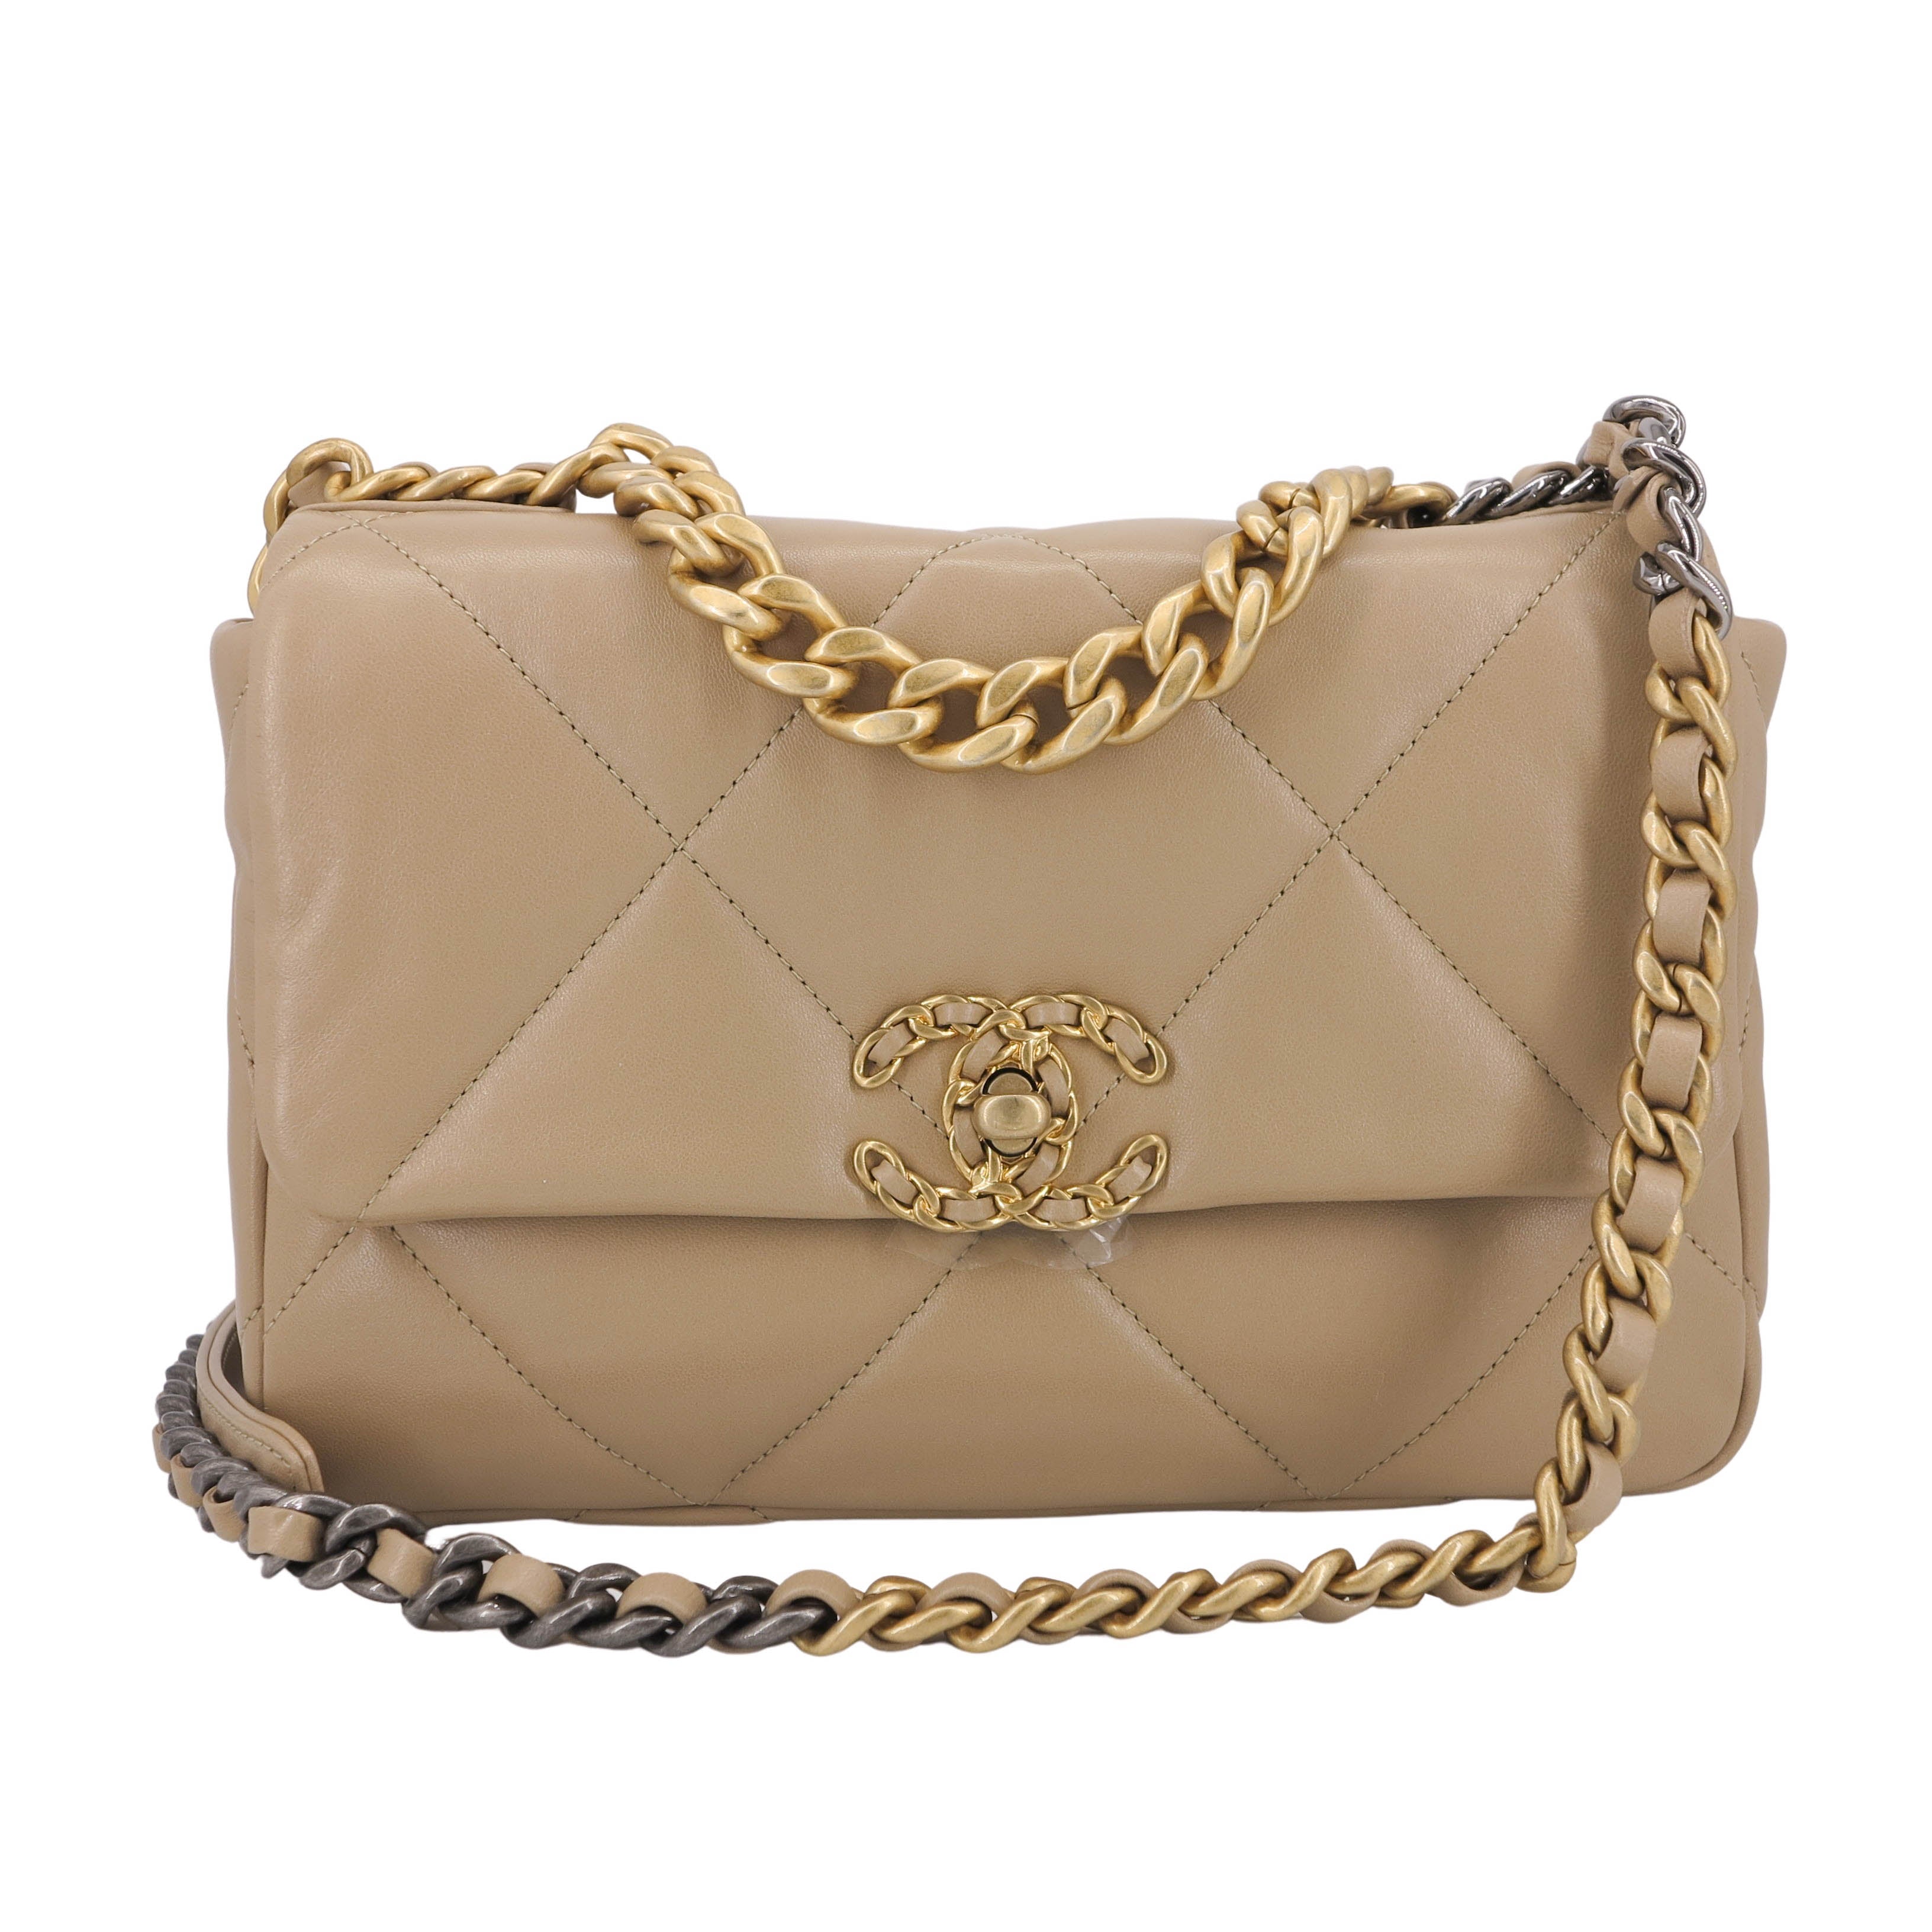 Mua Túi Đeo Chéo Chanel C19 Small Flap Bag In Dark Beige Màu Be - Chanel -  Mua tại Vua Hàng Hiệu h062683